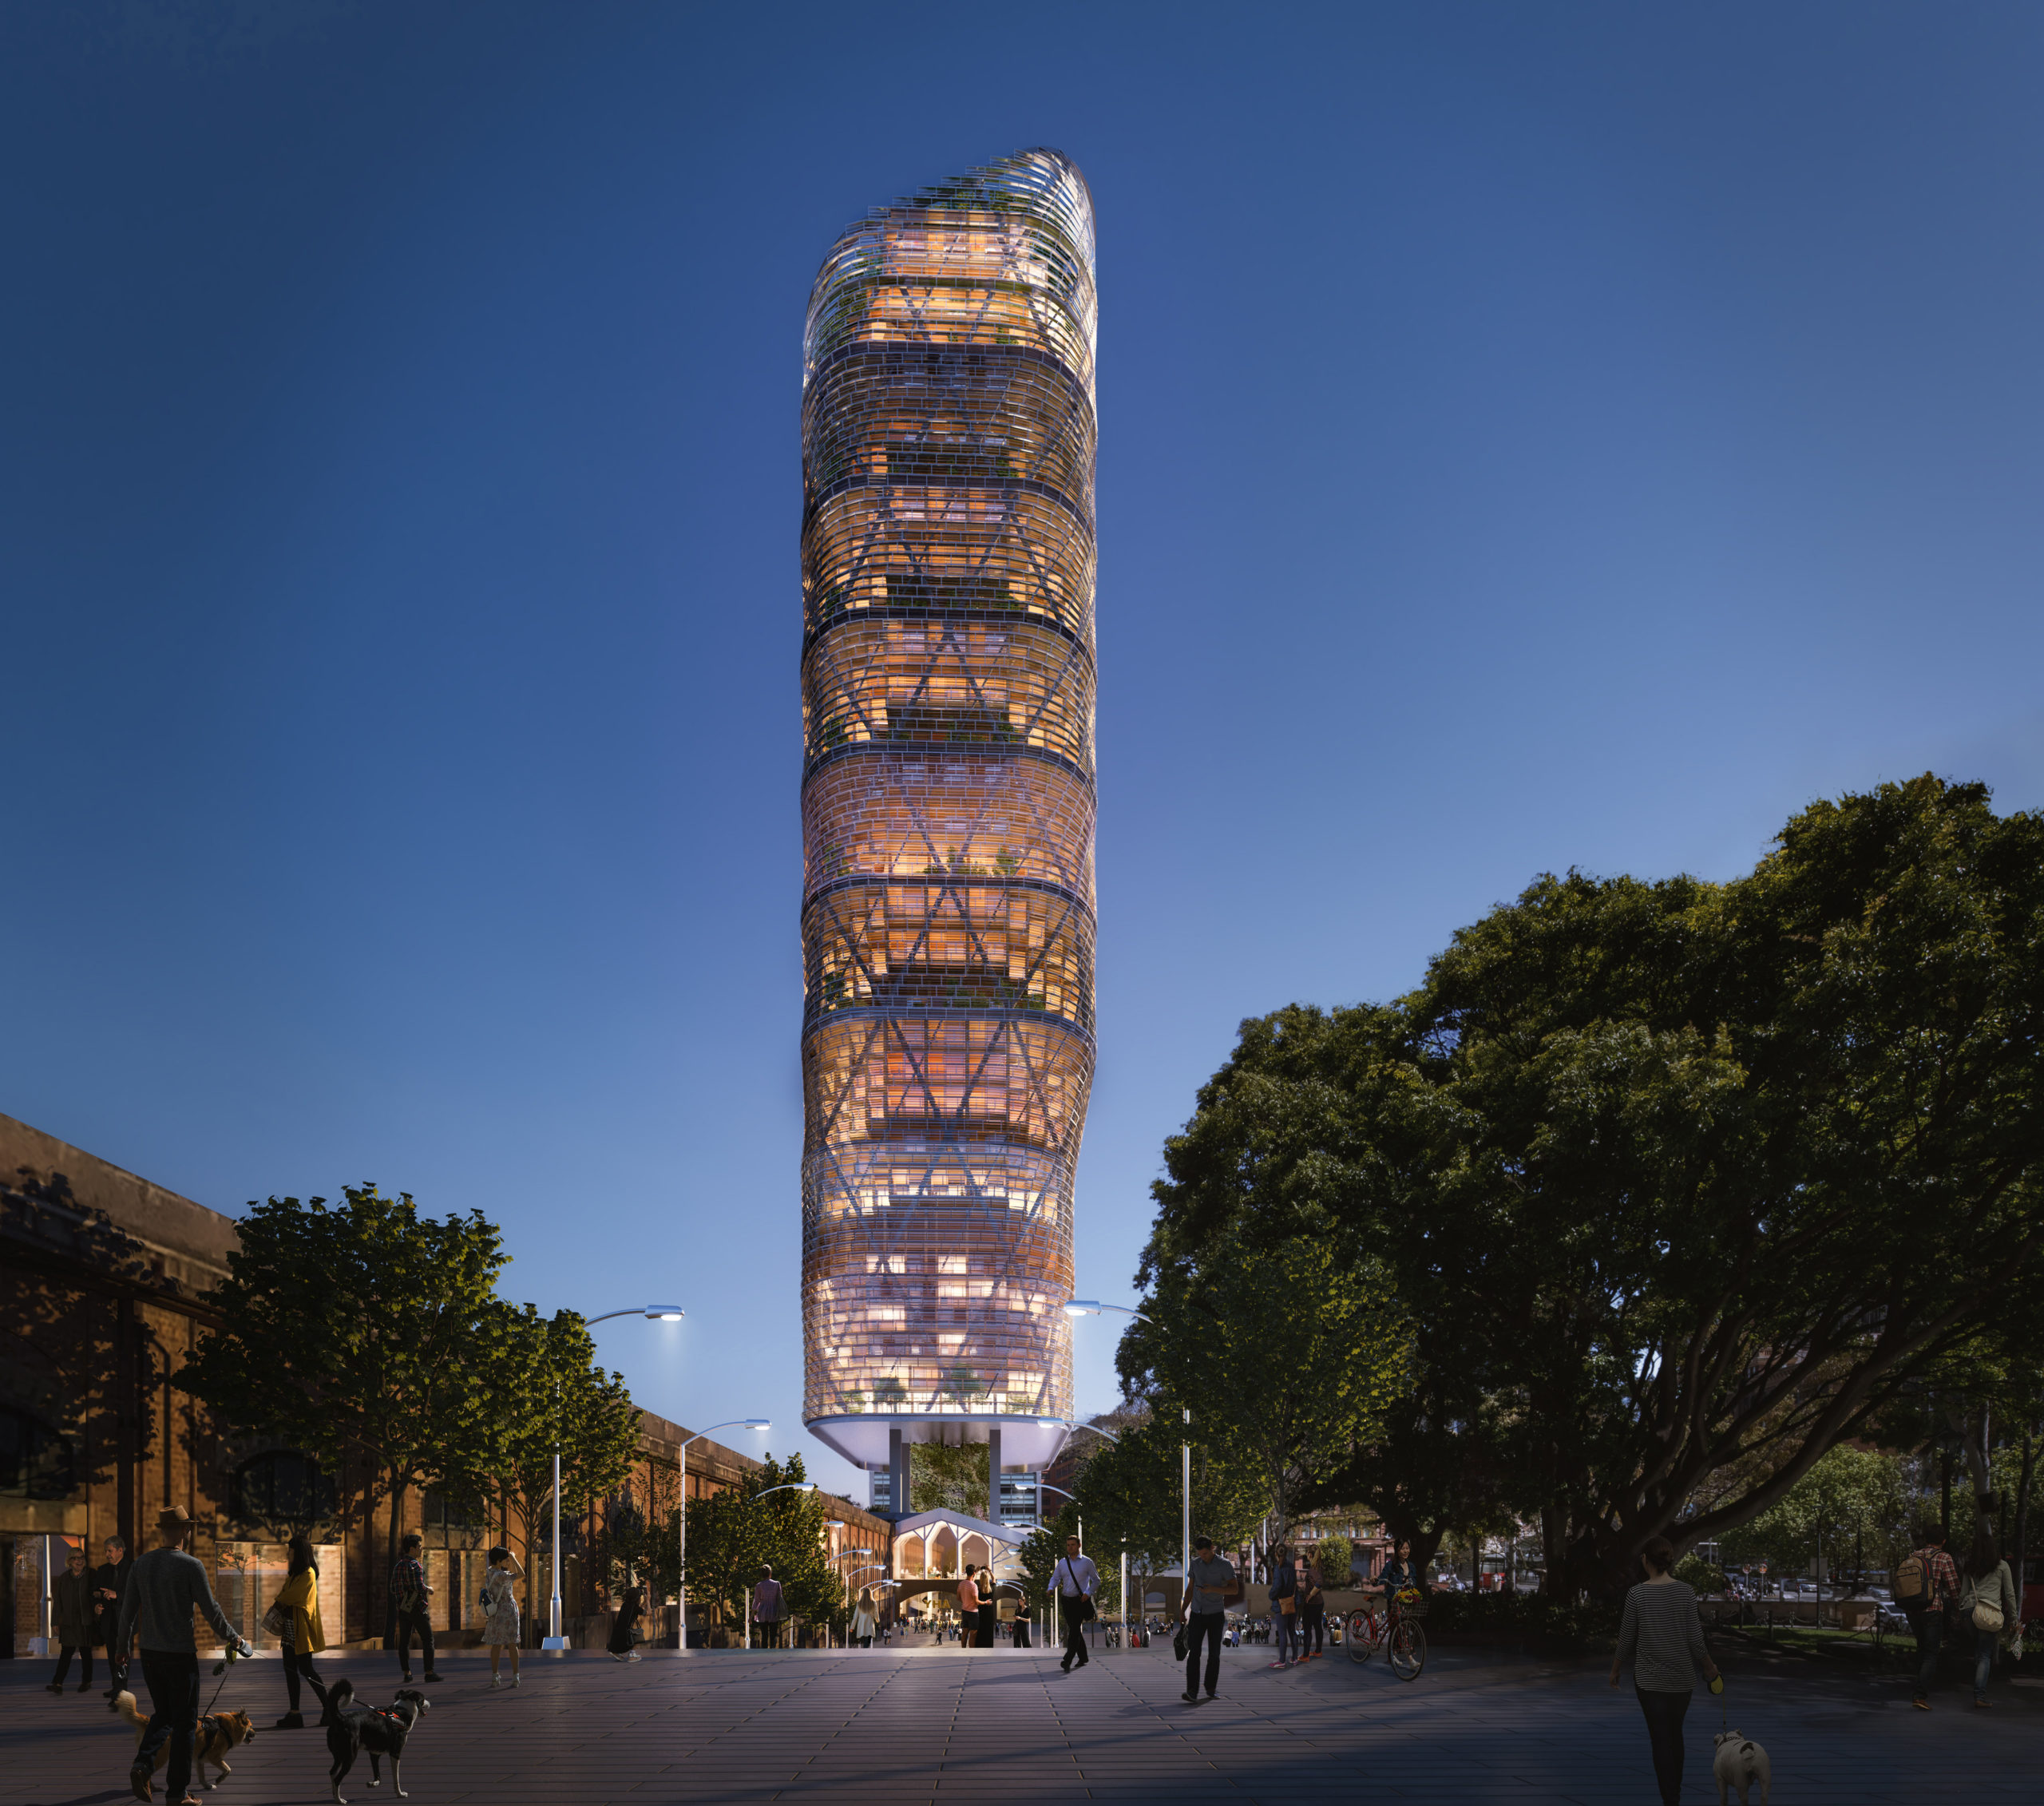 Atlassian HQ: Work starts on ‘world’s tallest hybrid timber tower’